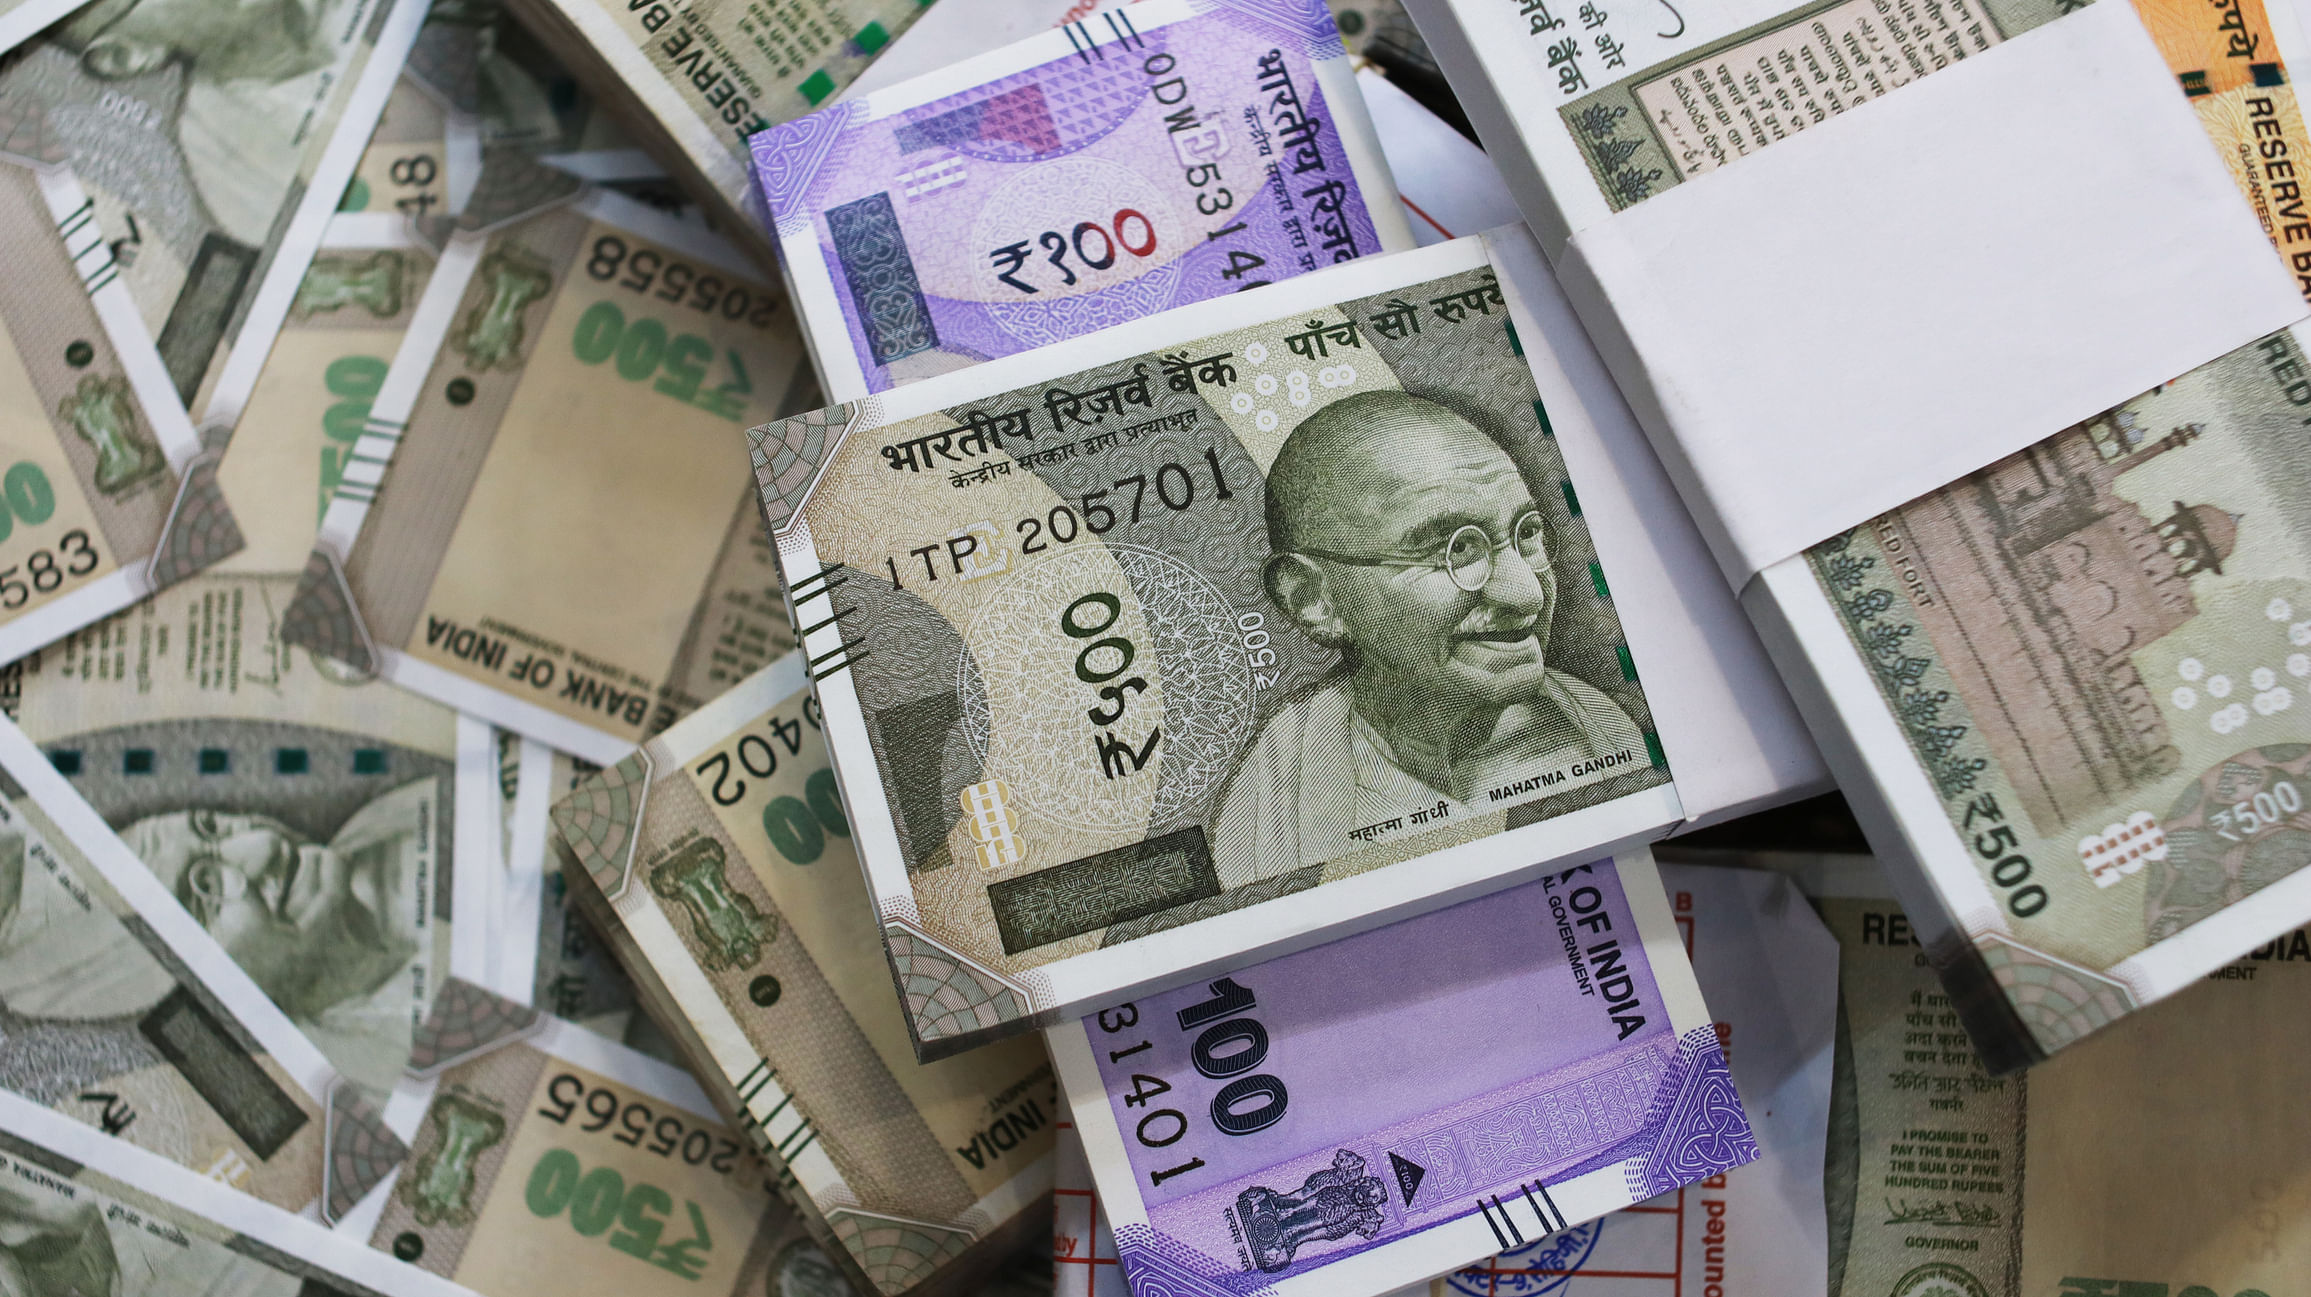 <div class="paragraphs"><p>Representative image showing Indian rupees.</p></div>